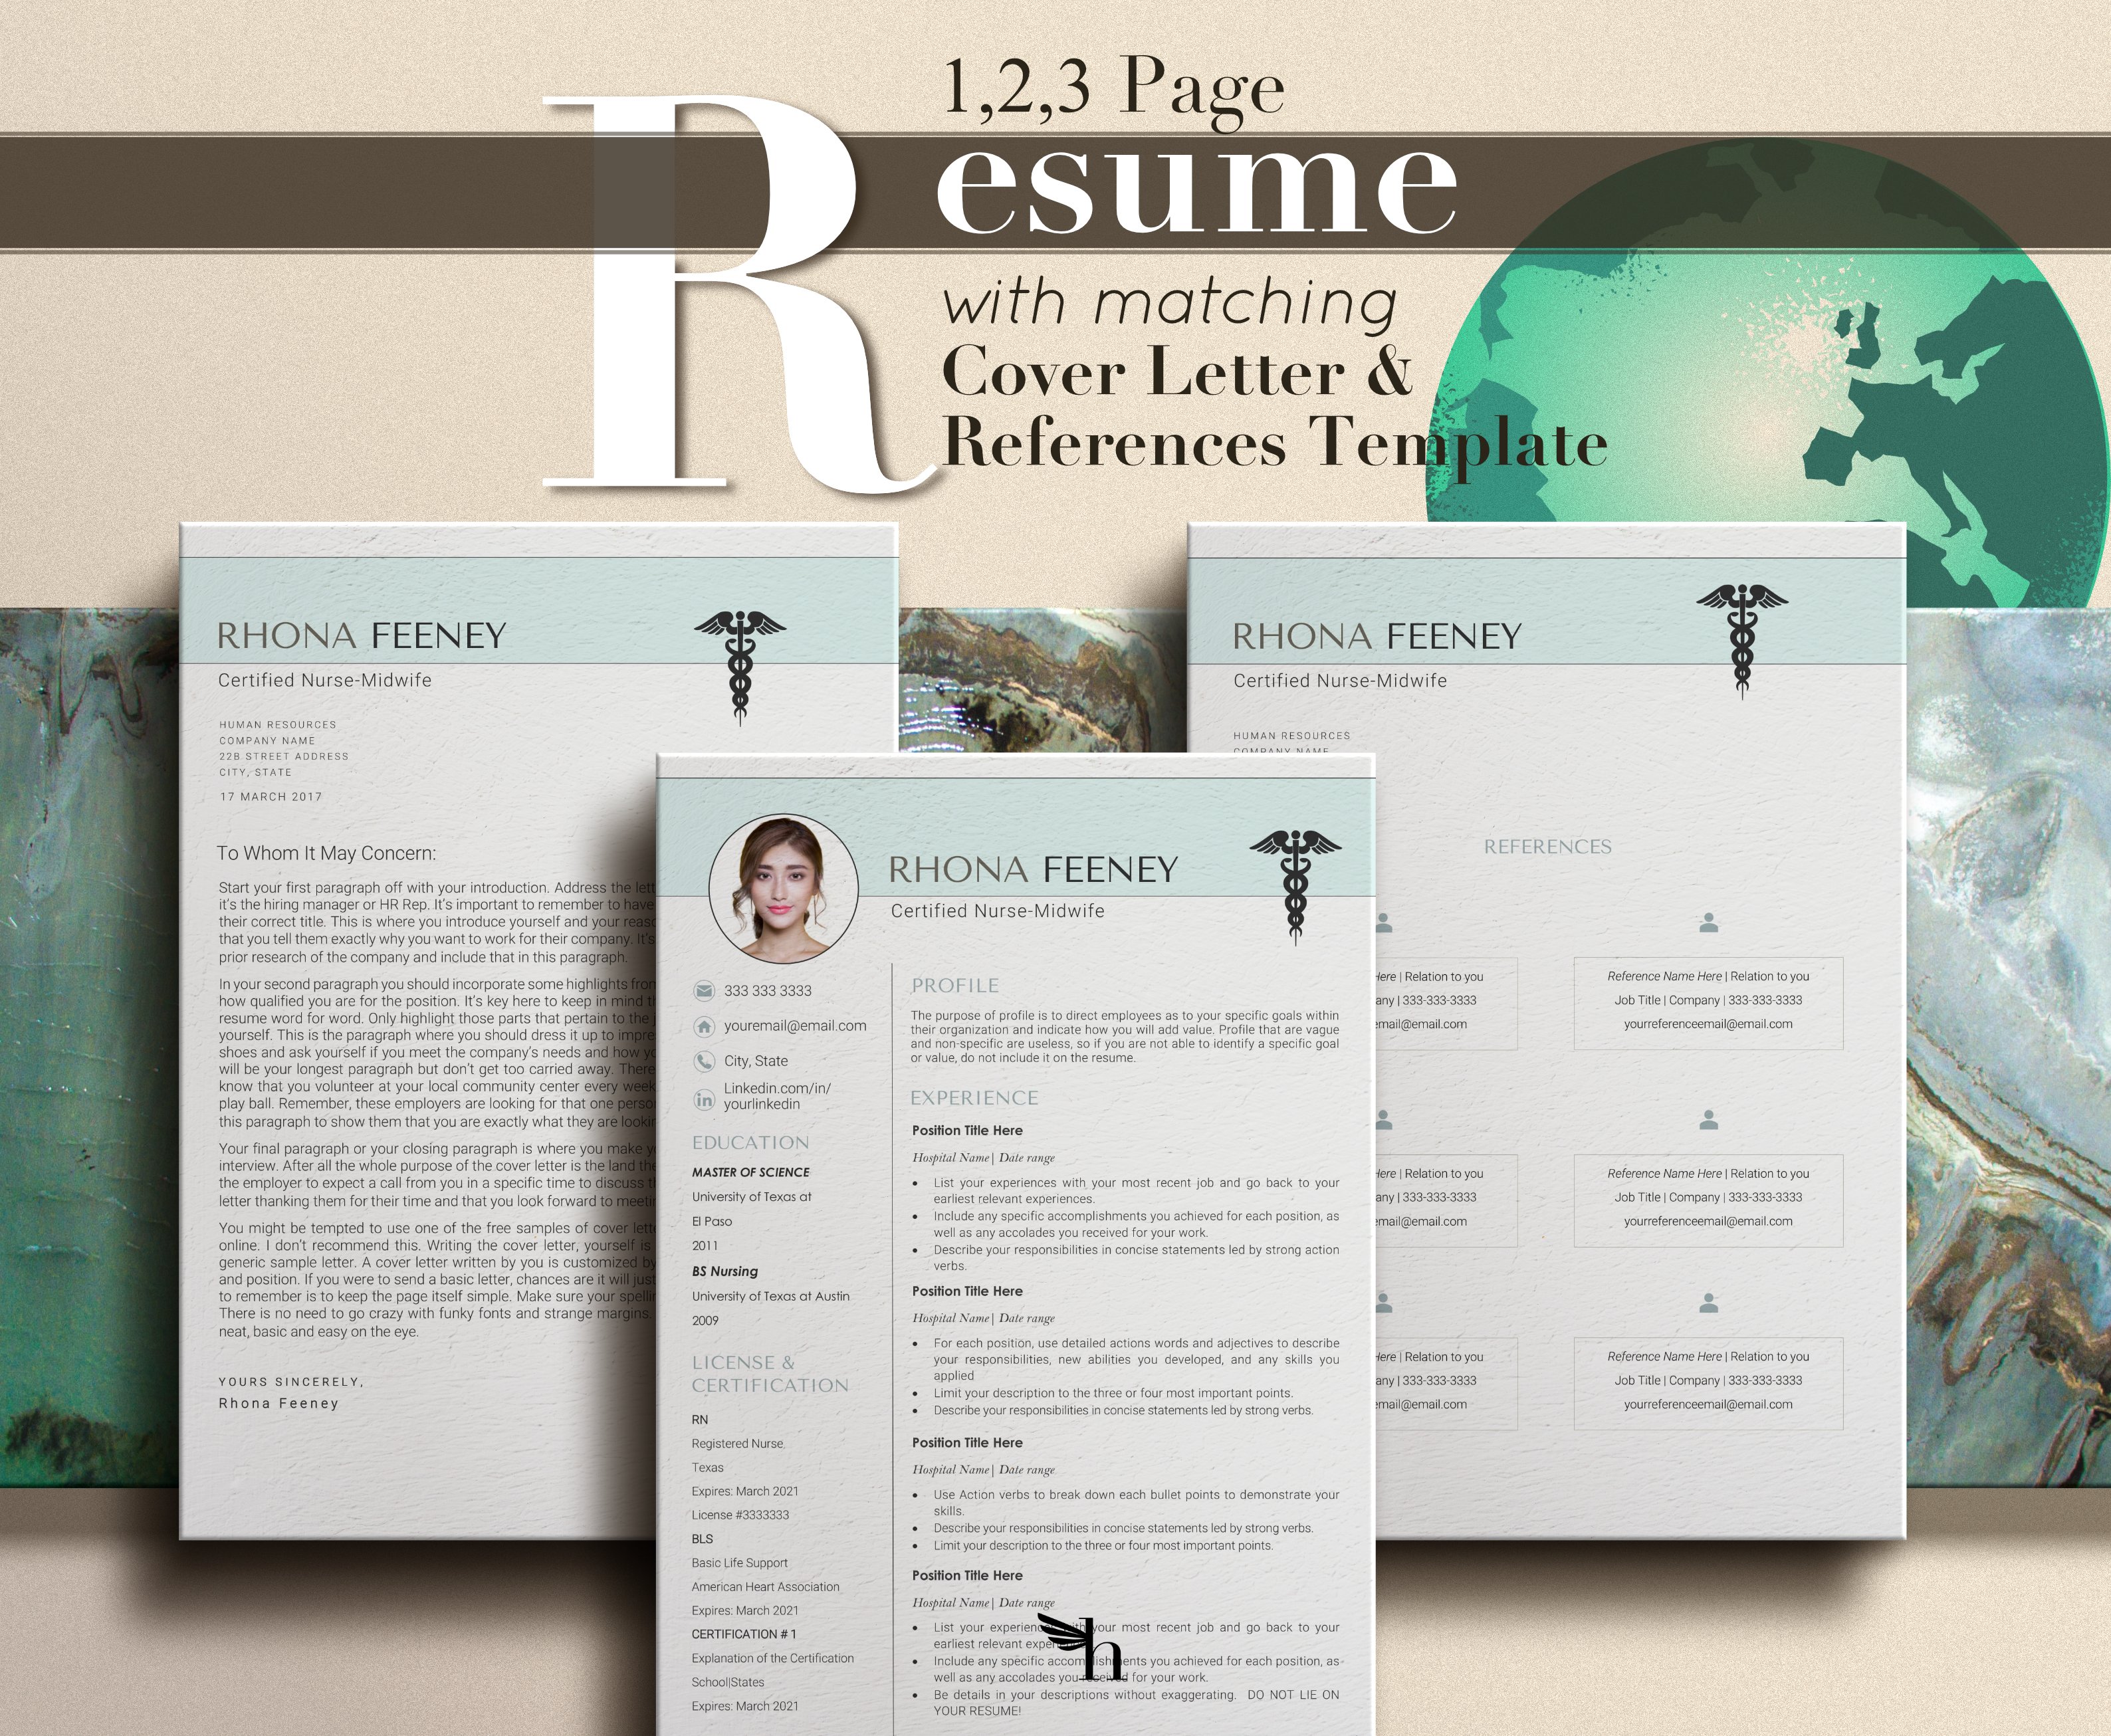 5 3 page resume template lebenslauf vorlage resume template with cover letter resume copy copy copy copy copy 4 896